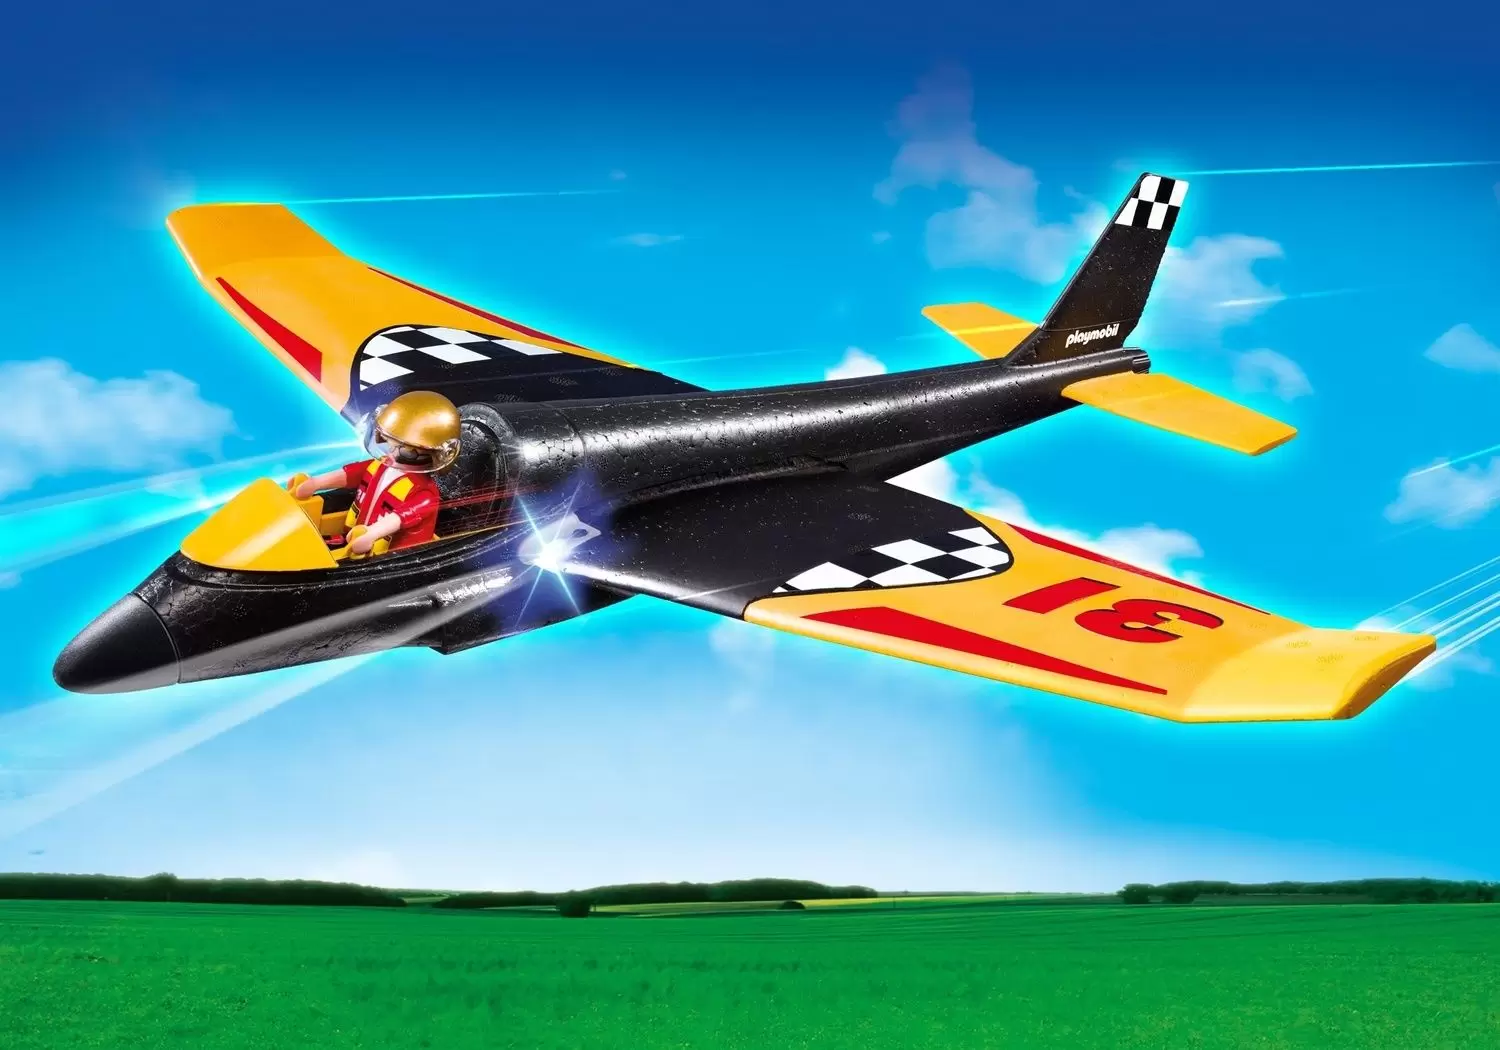 Playmobil Airport & Planes - Race plane